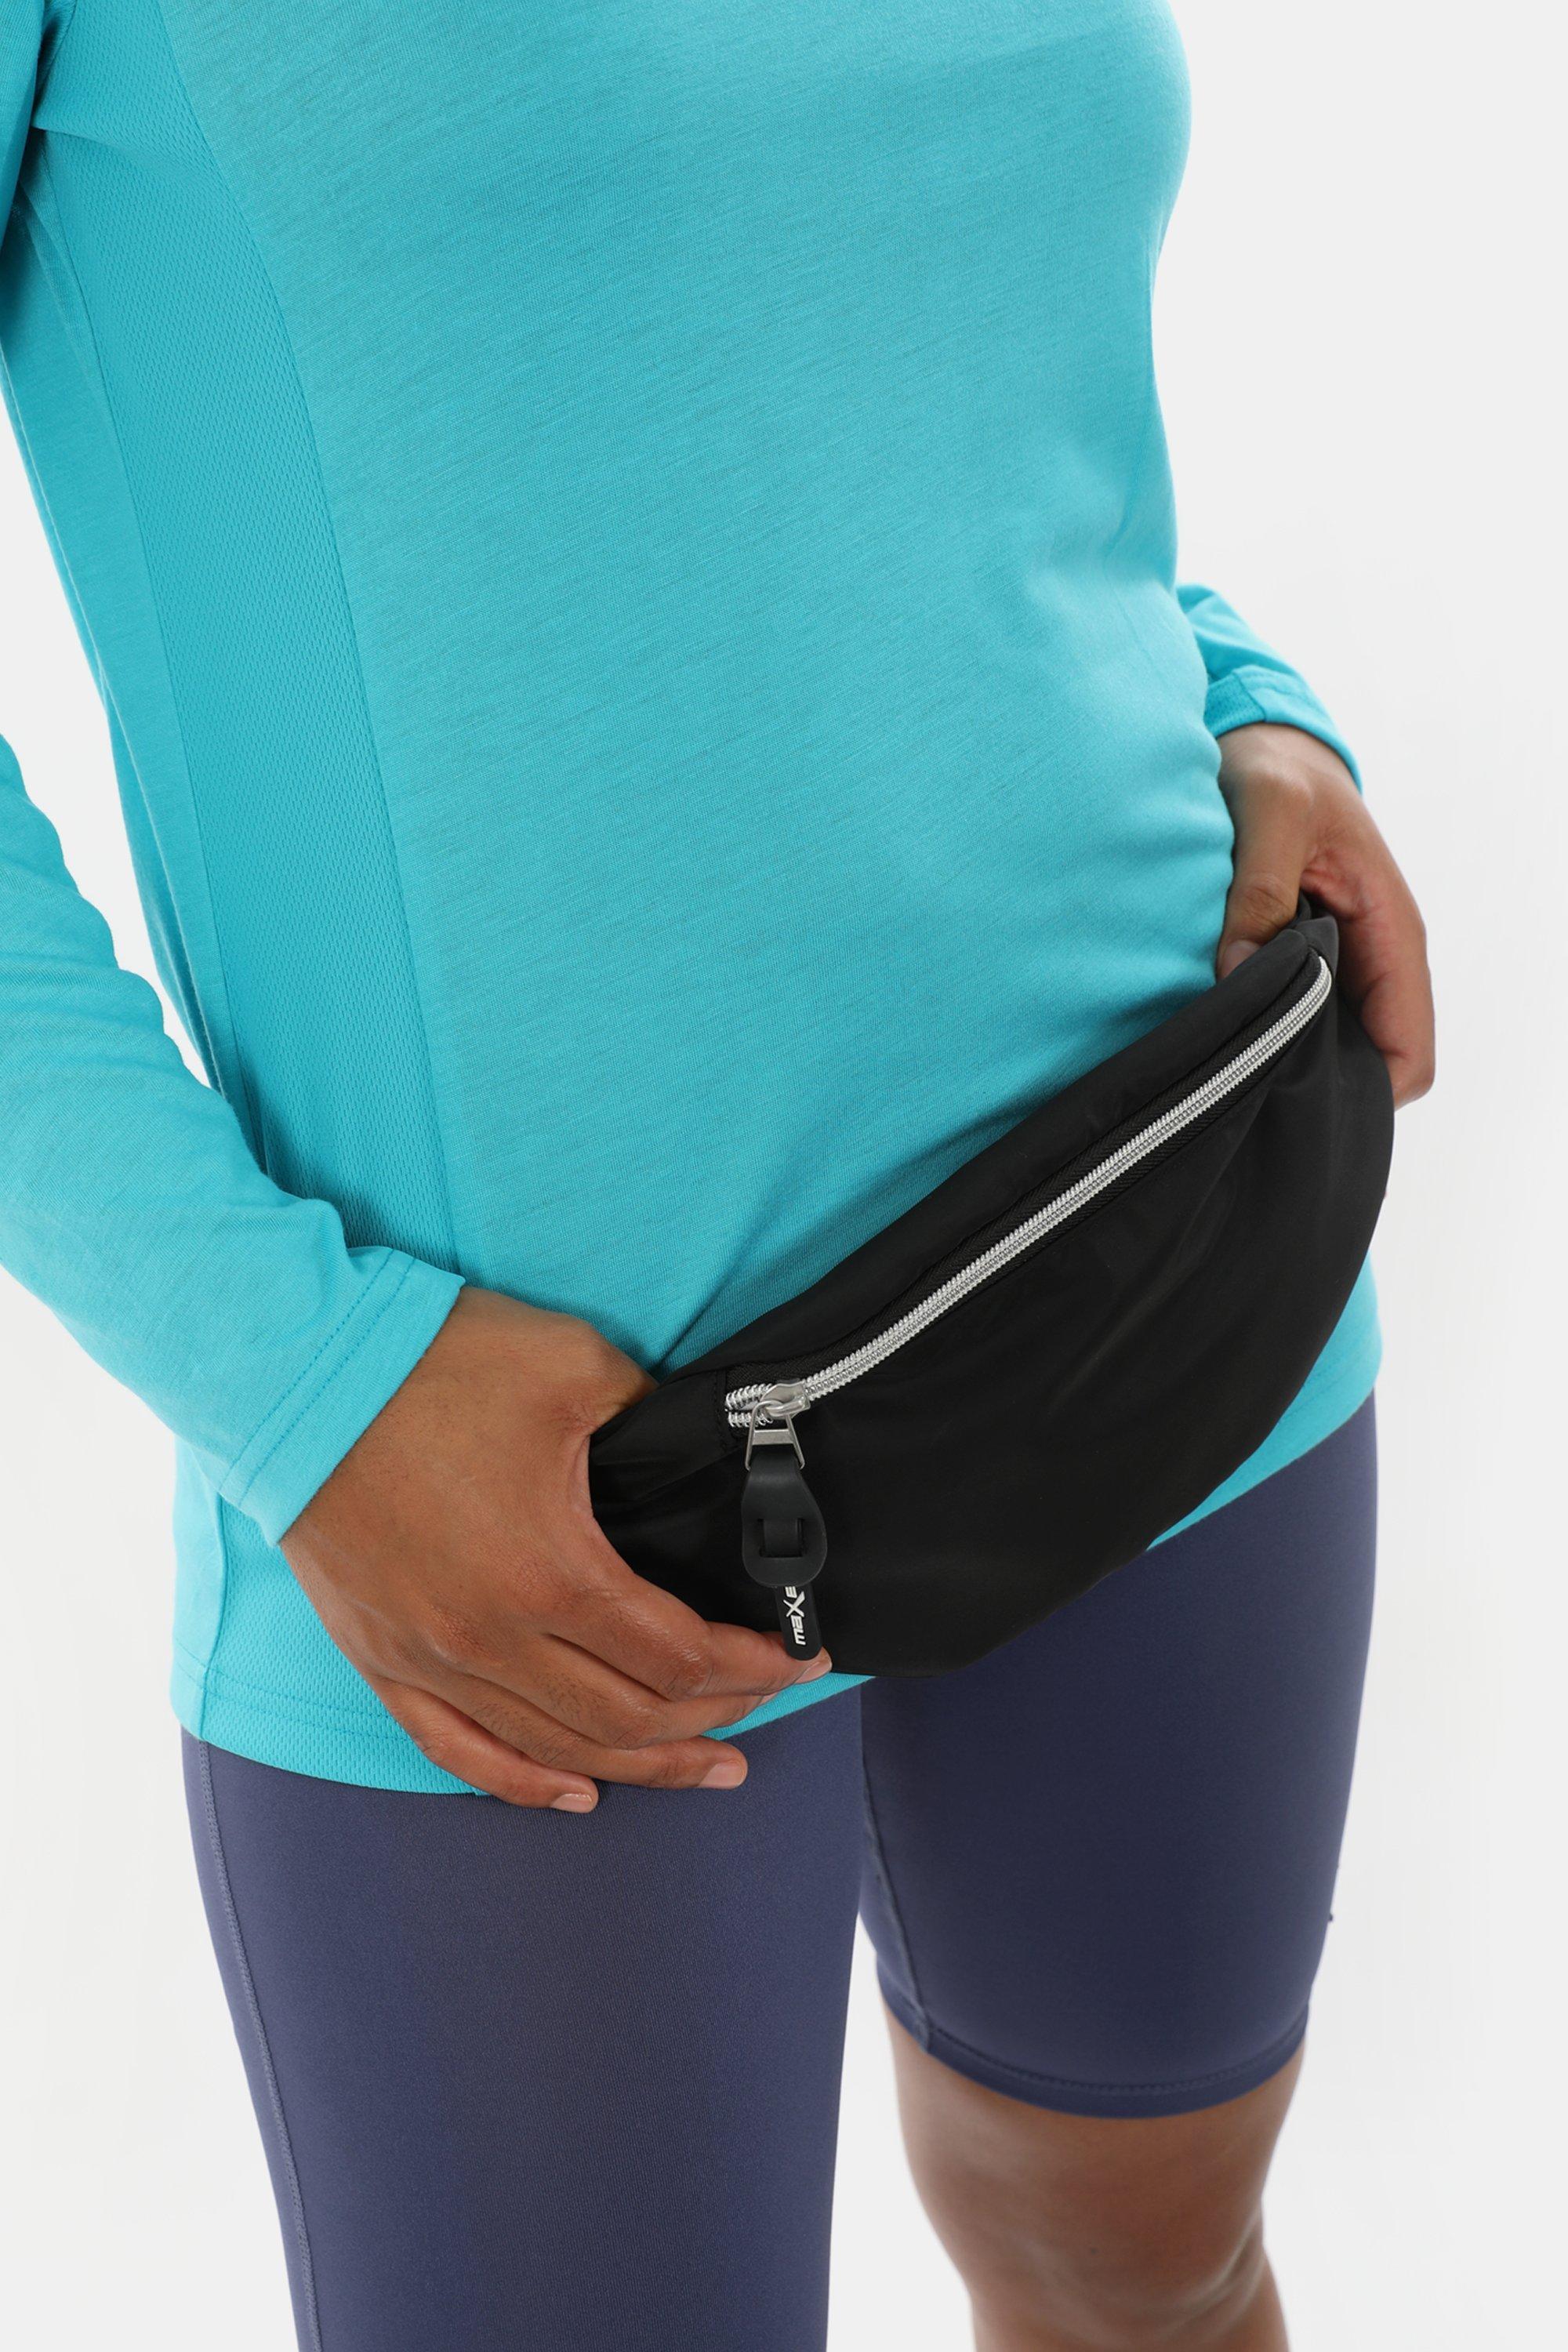  Basketball Fanny Packs Travel Waist Pack For Women Men  Crossbody Bag Sling Pocket Belt Bag With Adjustable Strap For Casual  Running Sports : Sports & Outdoors